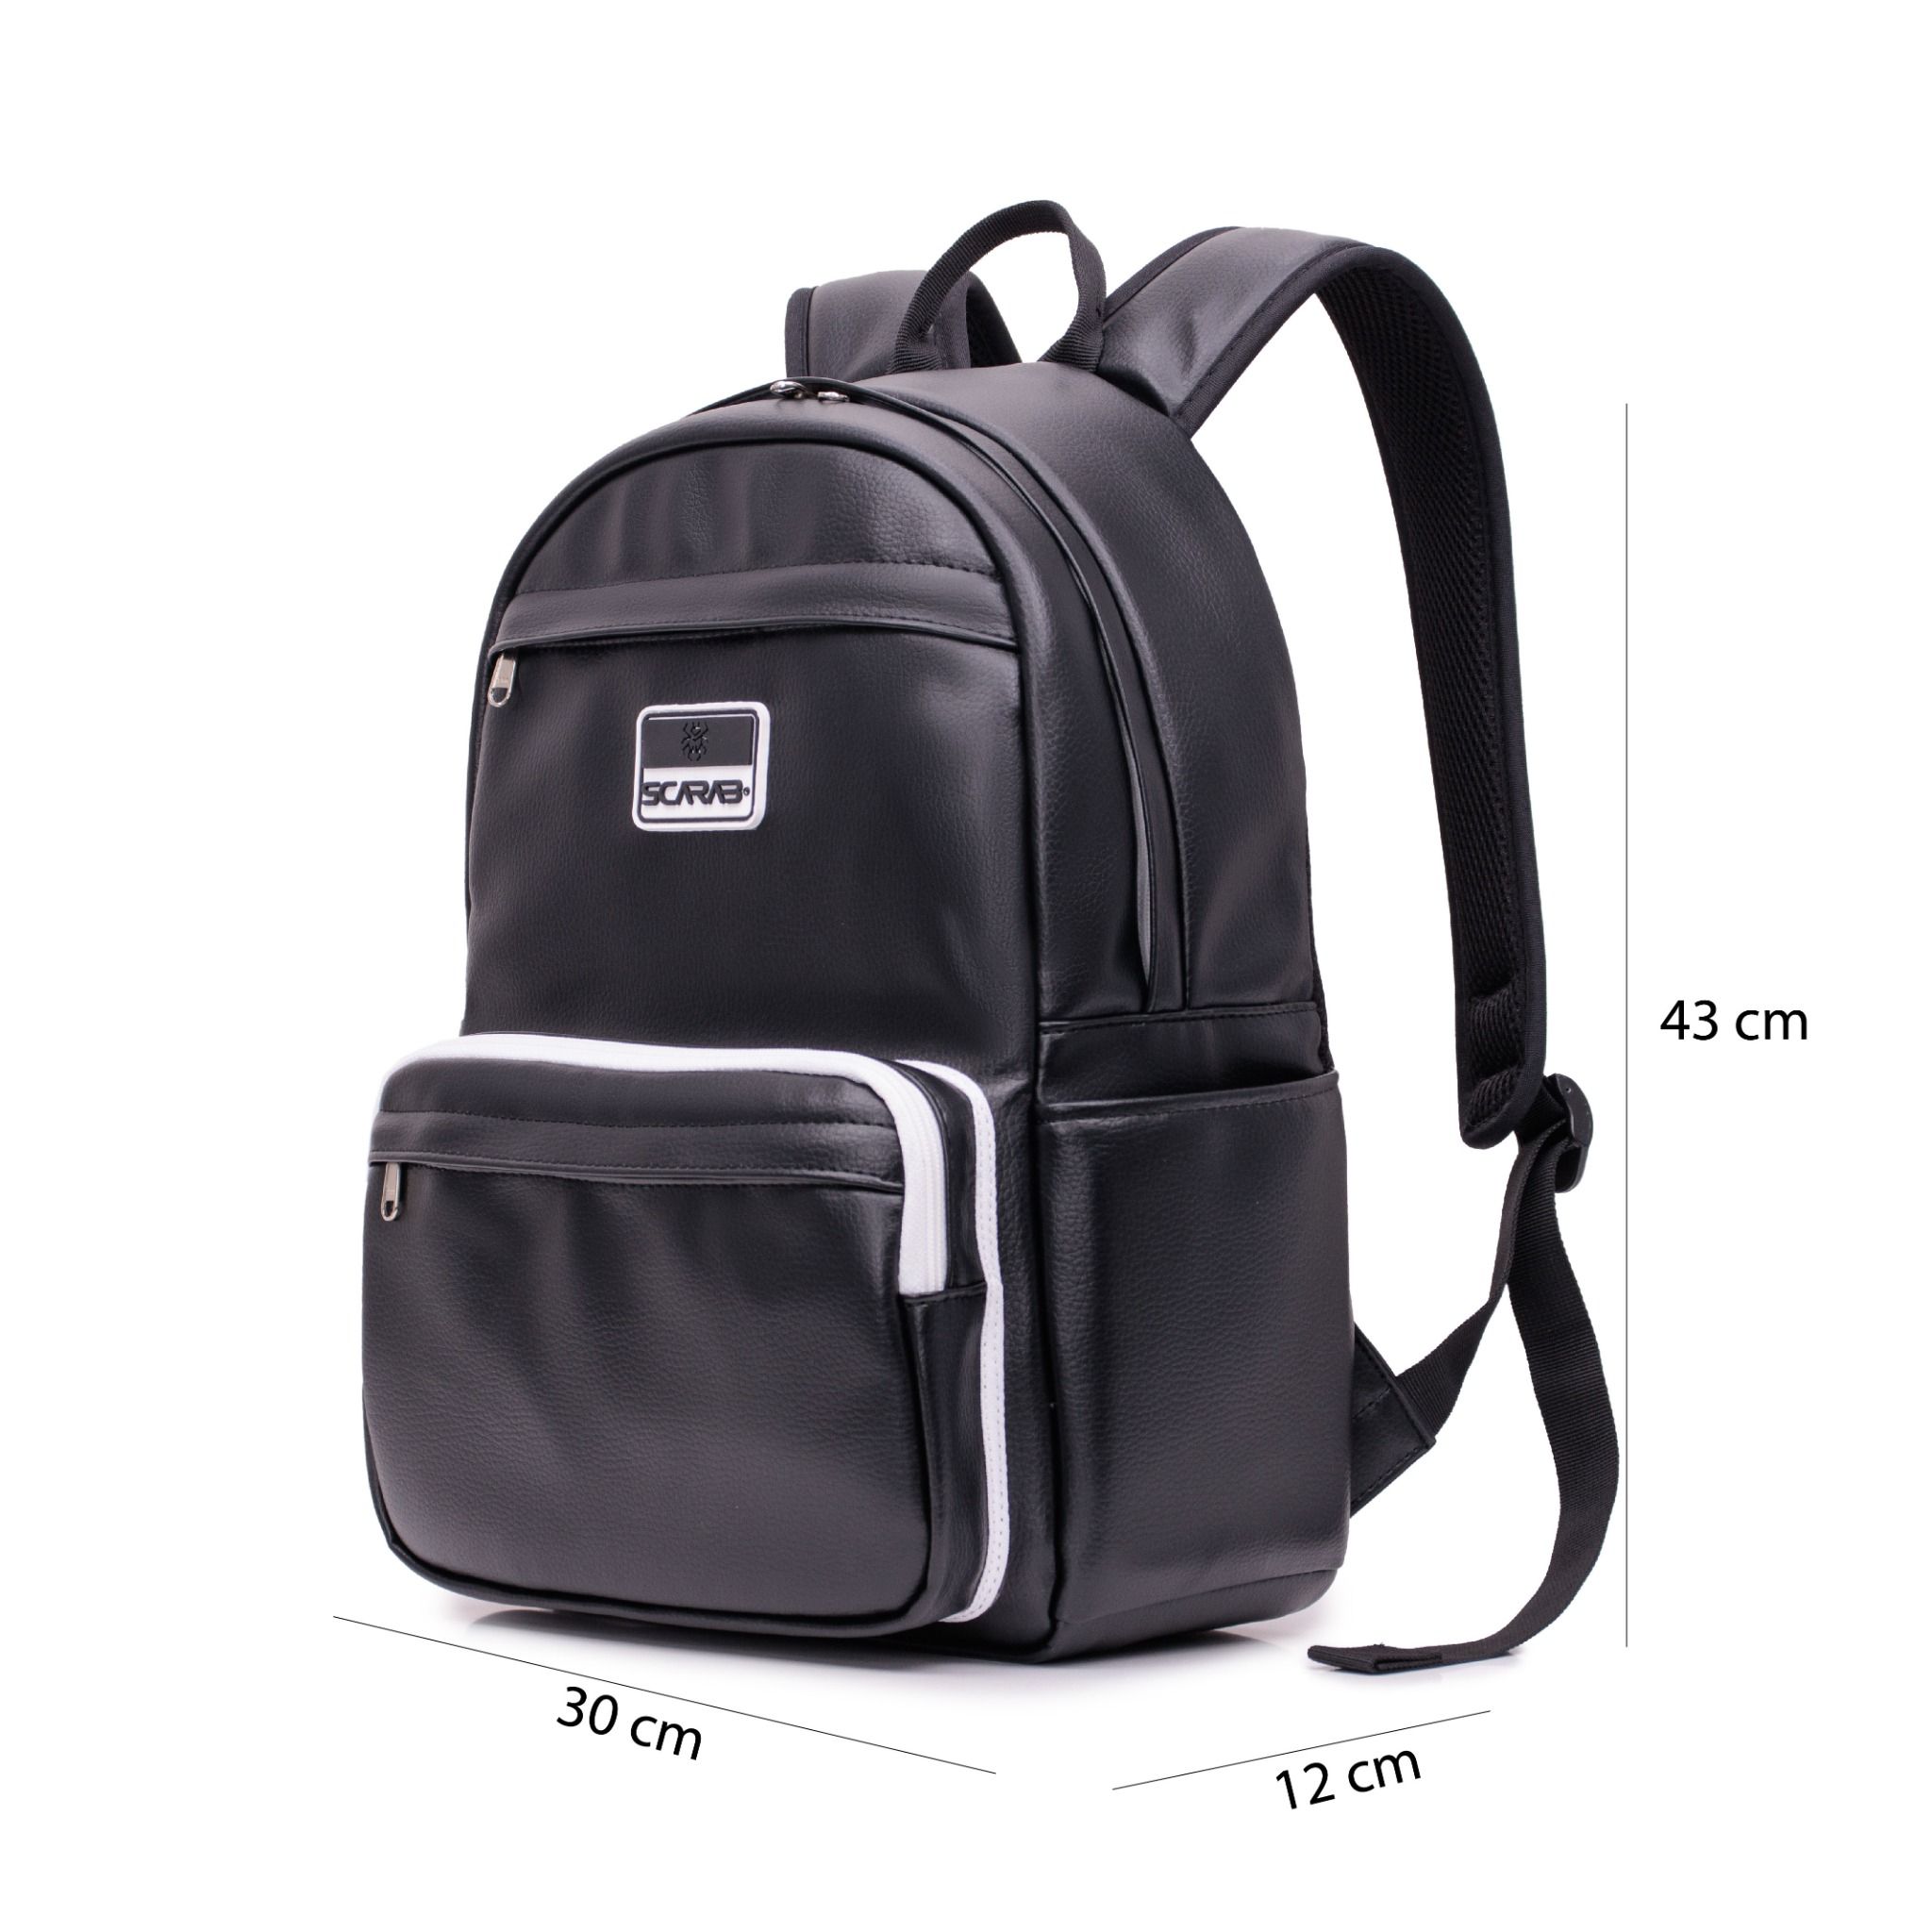  Multi Leather Backpack - Black 